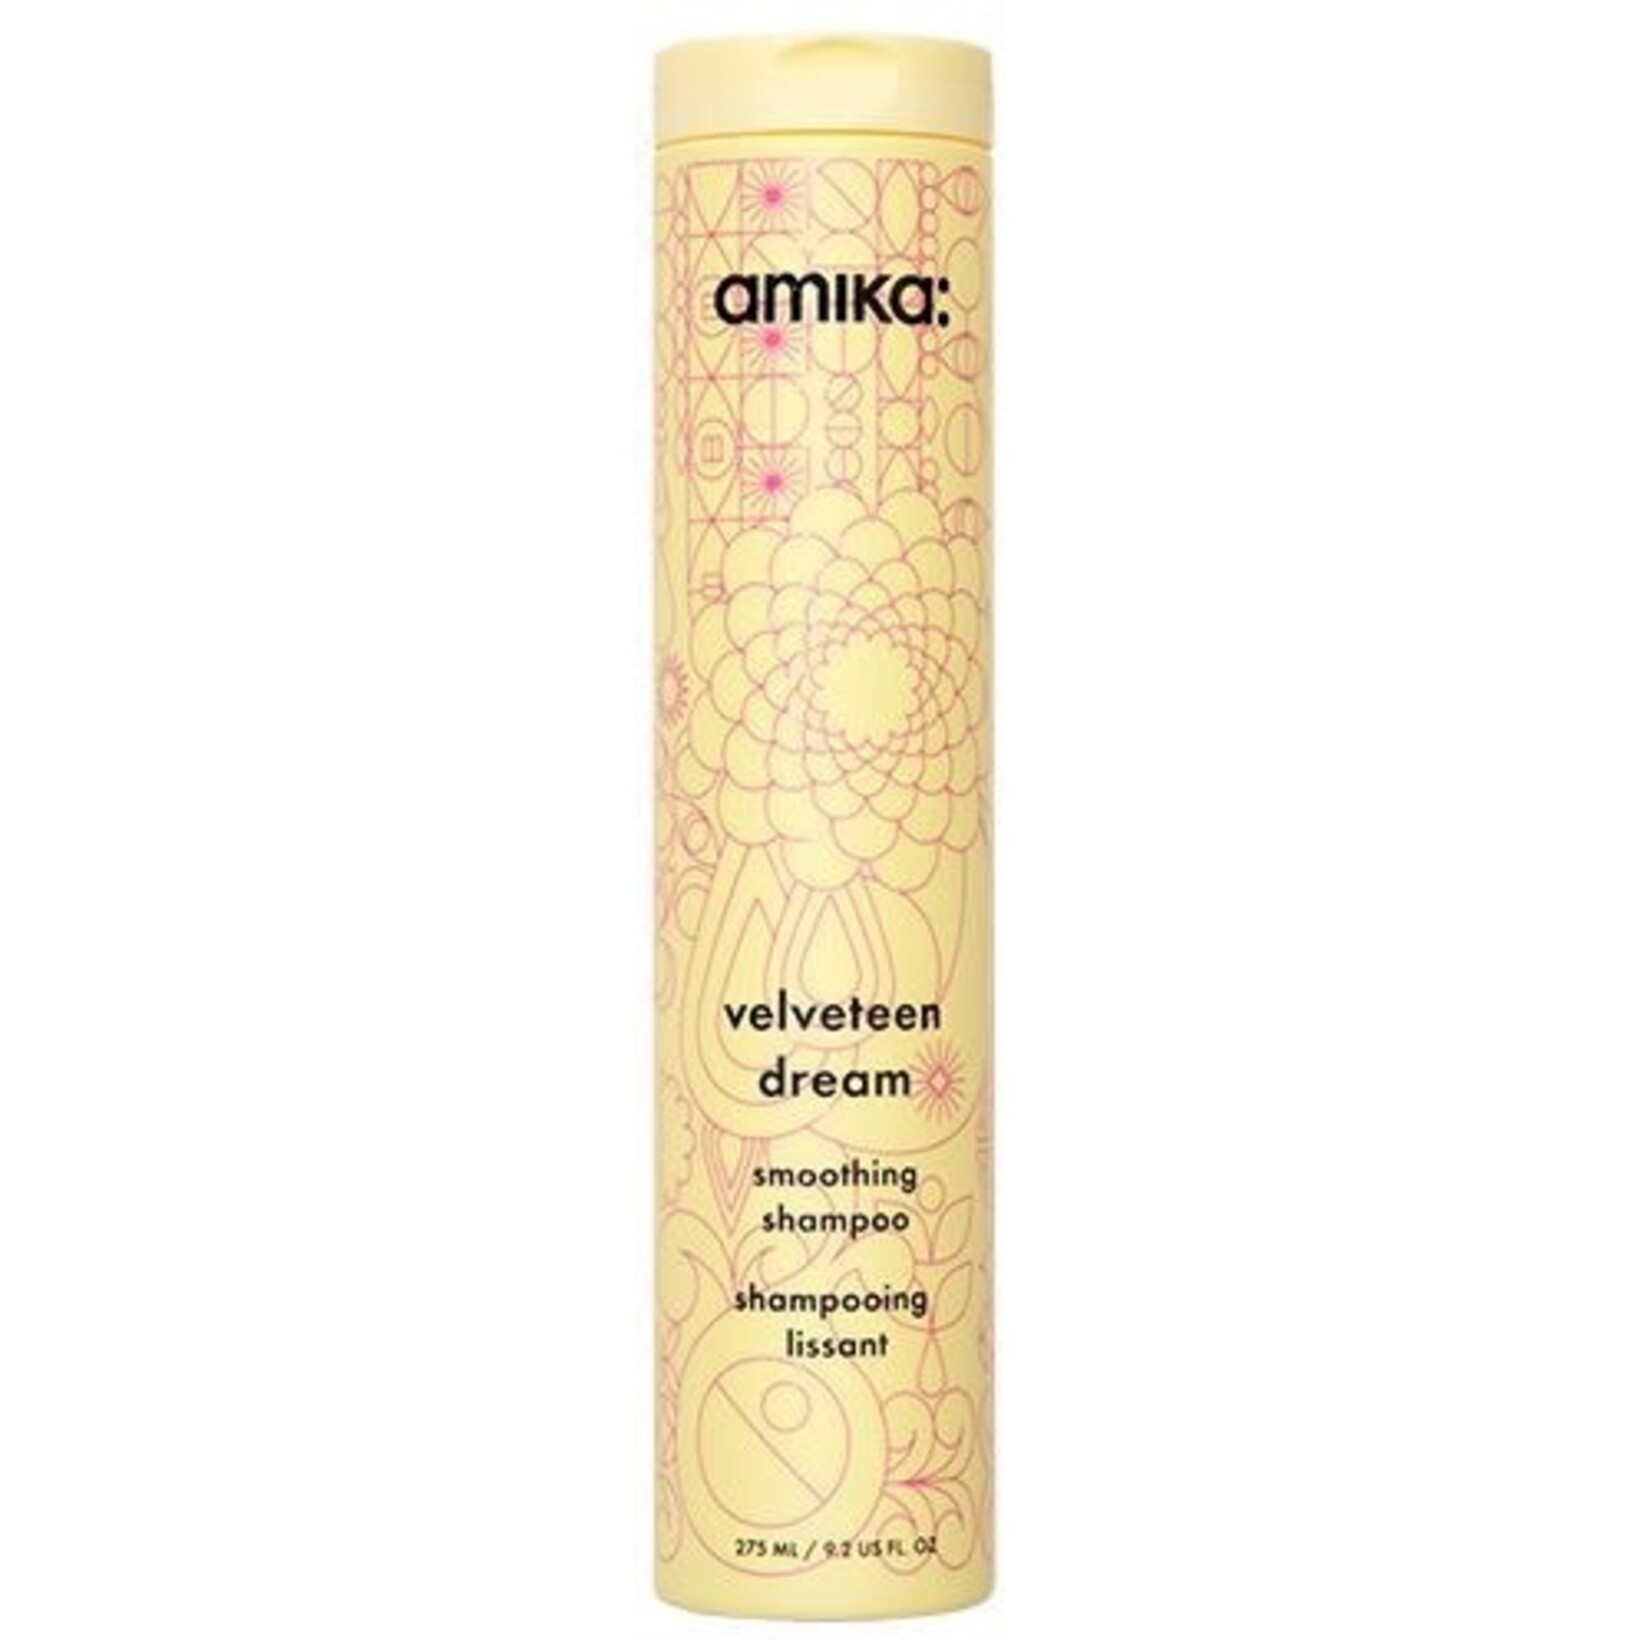 Amika: Amika: - Velveteen Dream - Smoothing shampoo 275ml